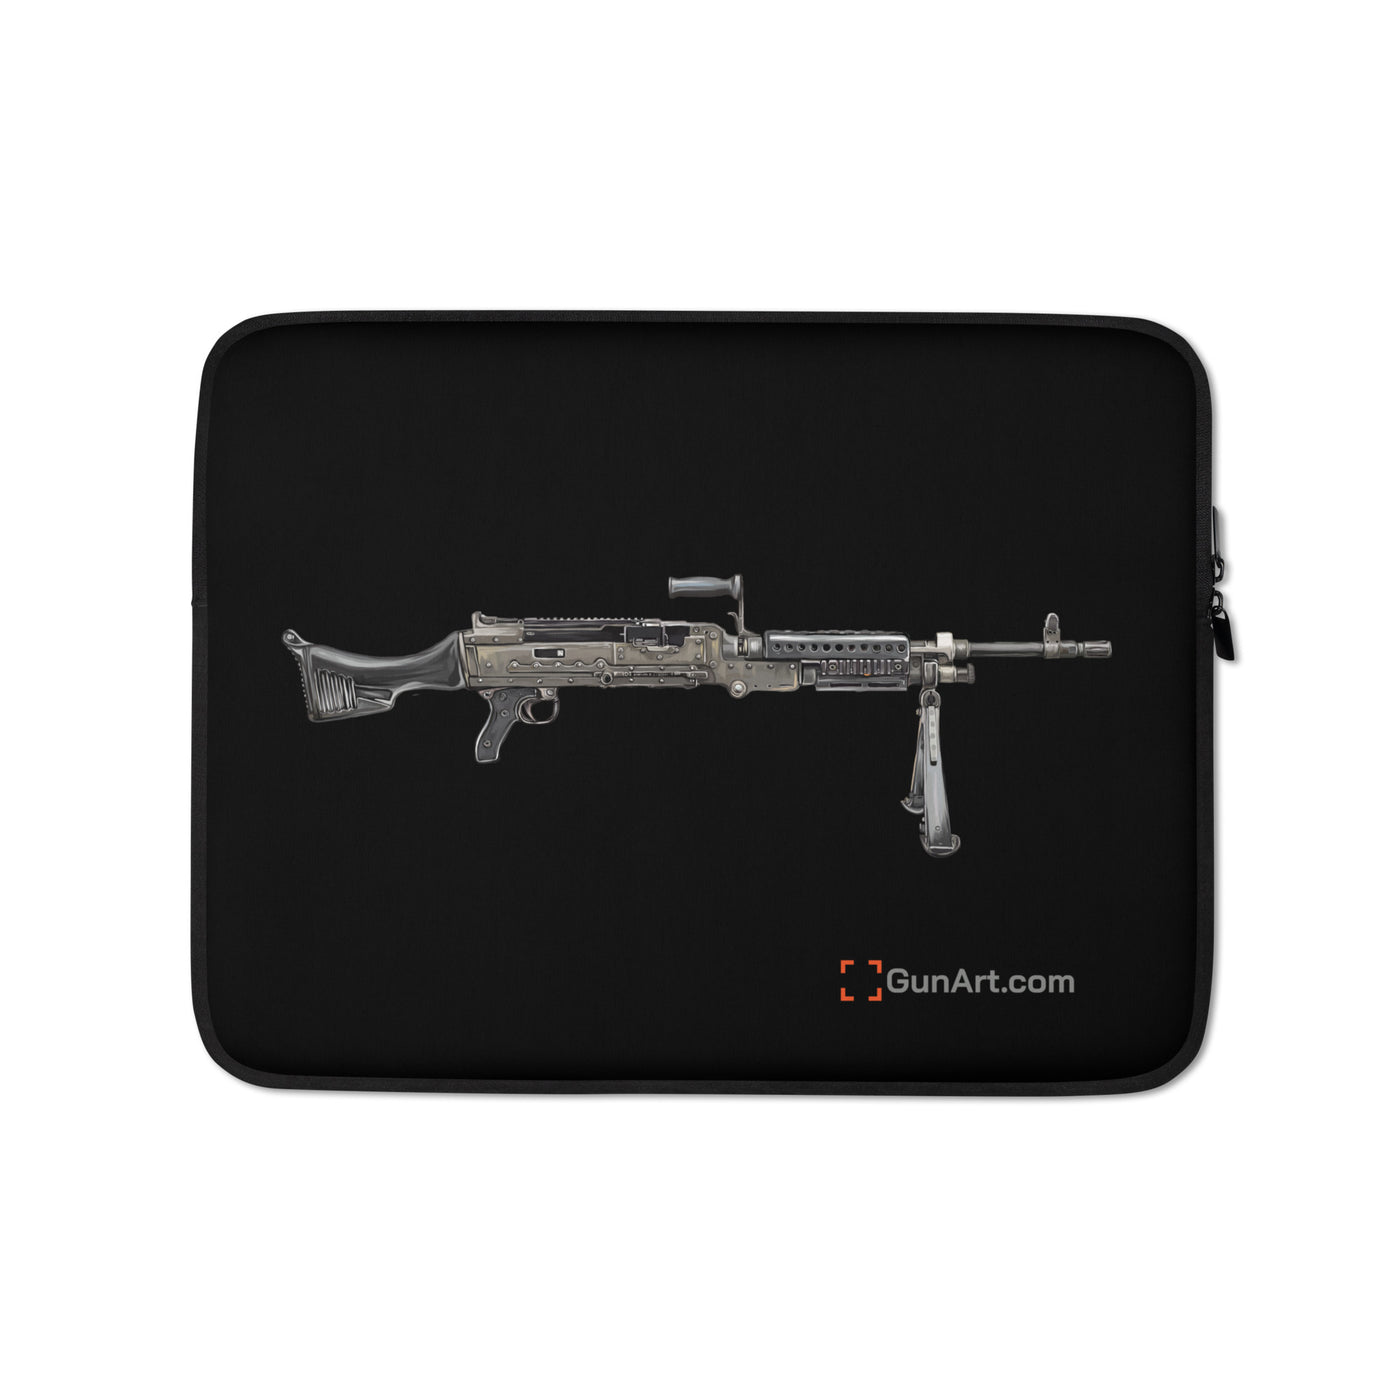 M240B - Belt Fed 7.62x51 Machine Gun Laptop Sleeve - Just The Piece - Black Background